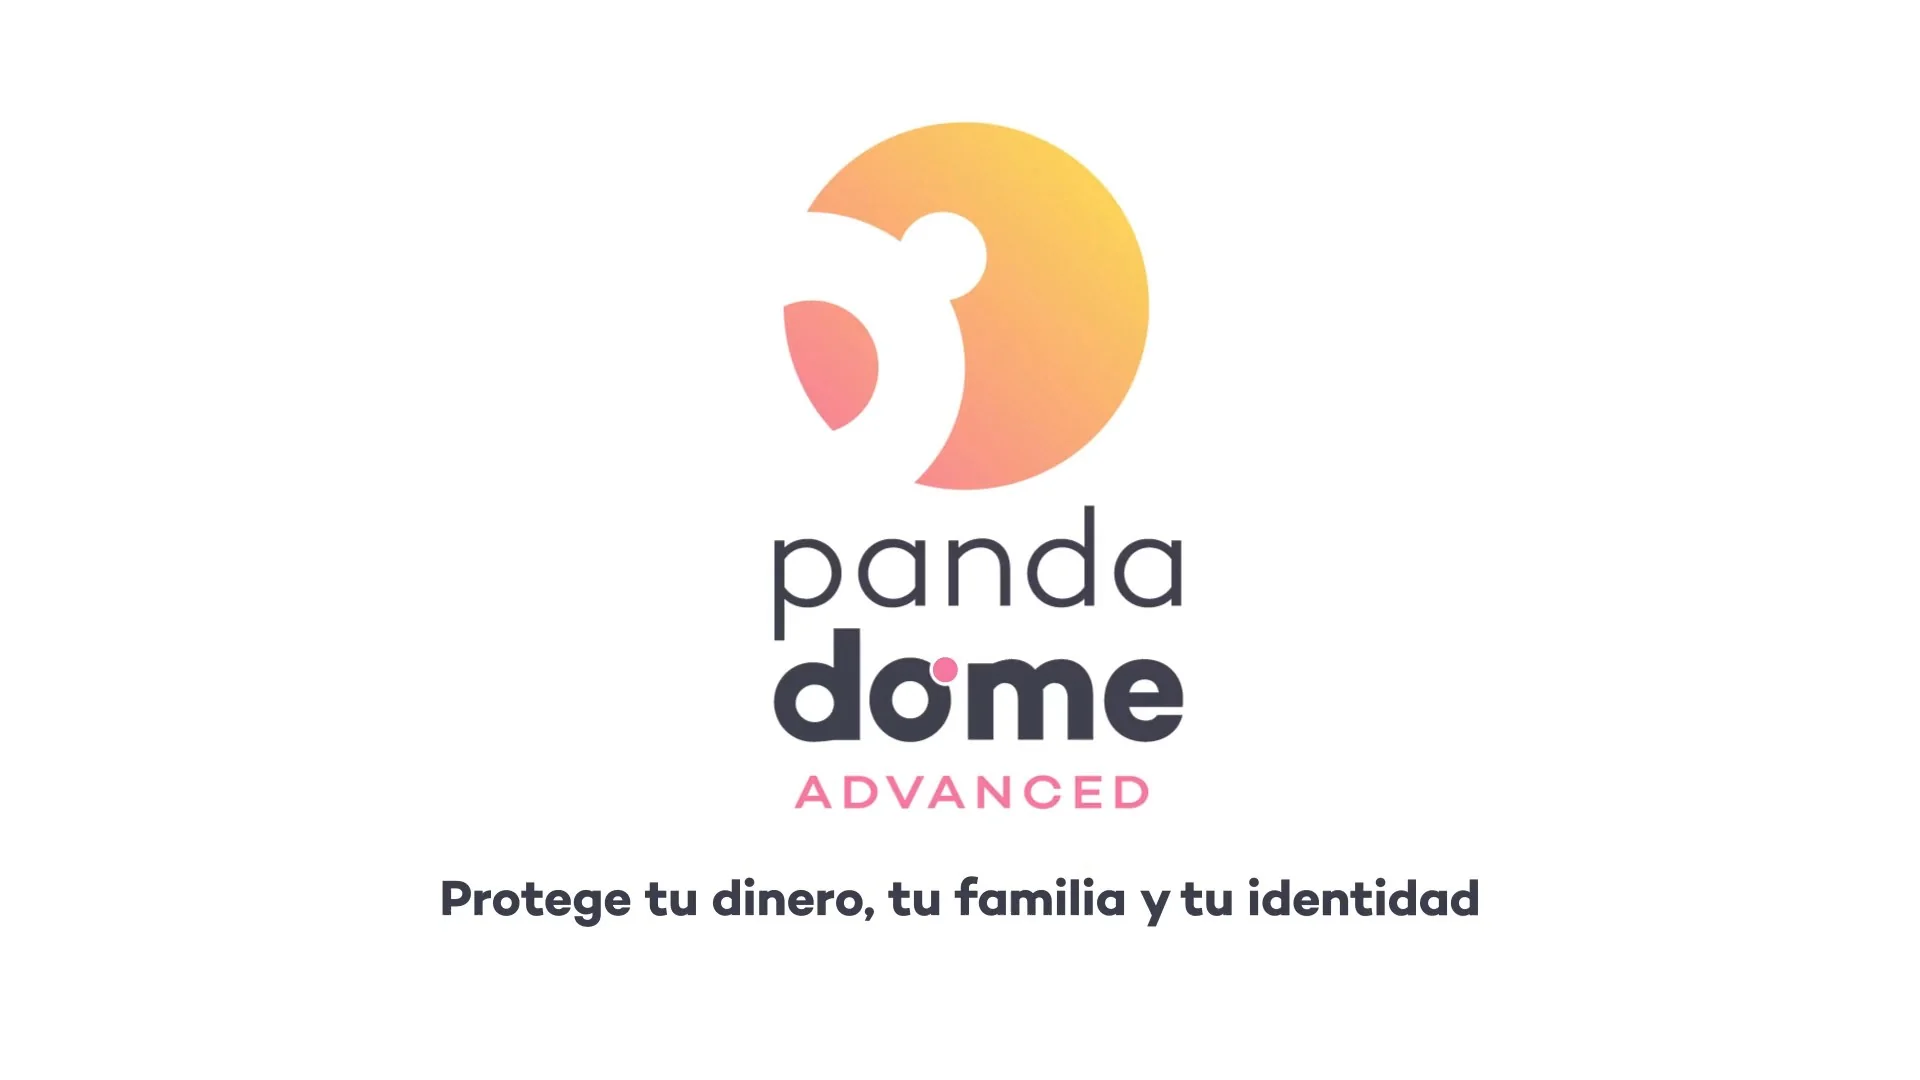 panda dome advanced video